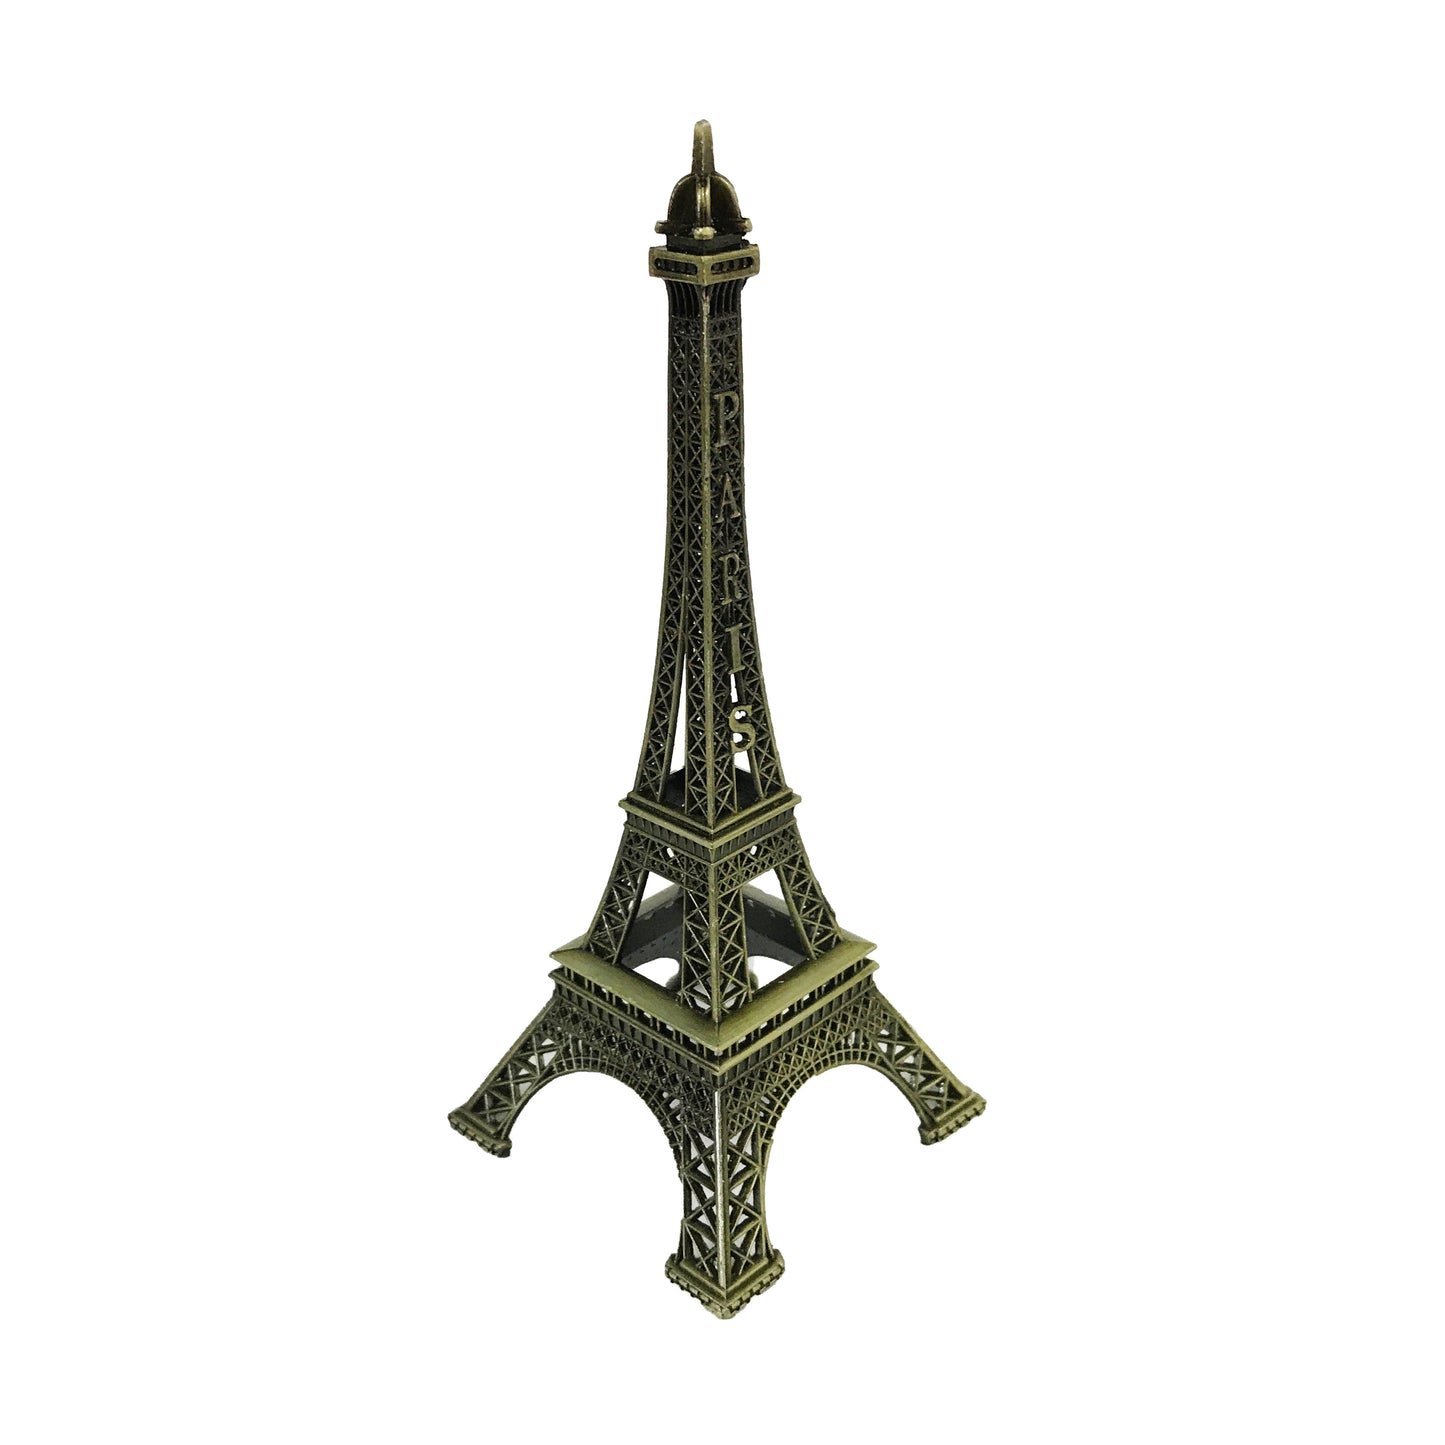 Allgala Eiffel Tower Statue 7" (18cm) Decor Alloy Metal